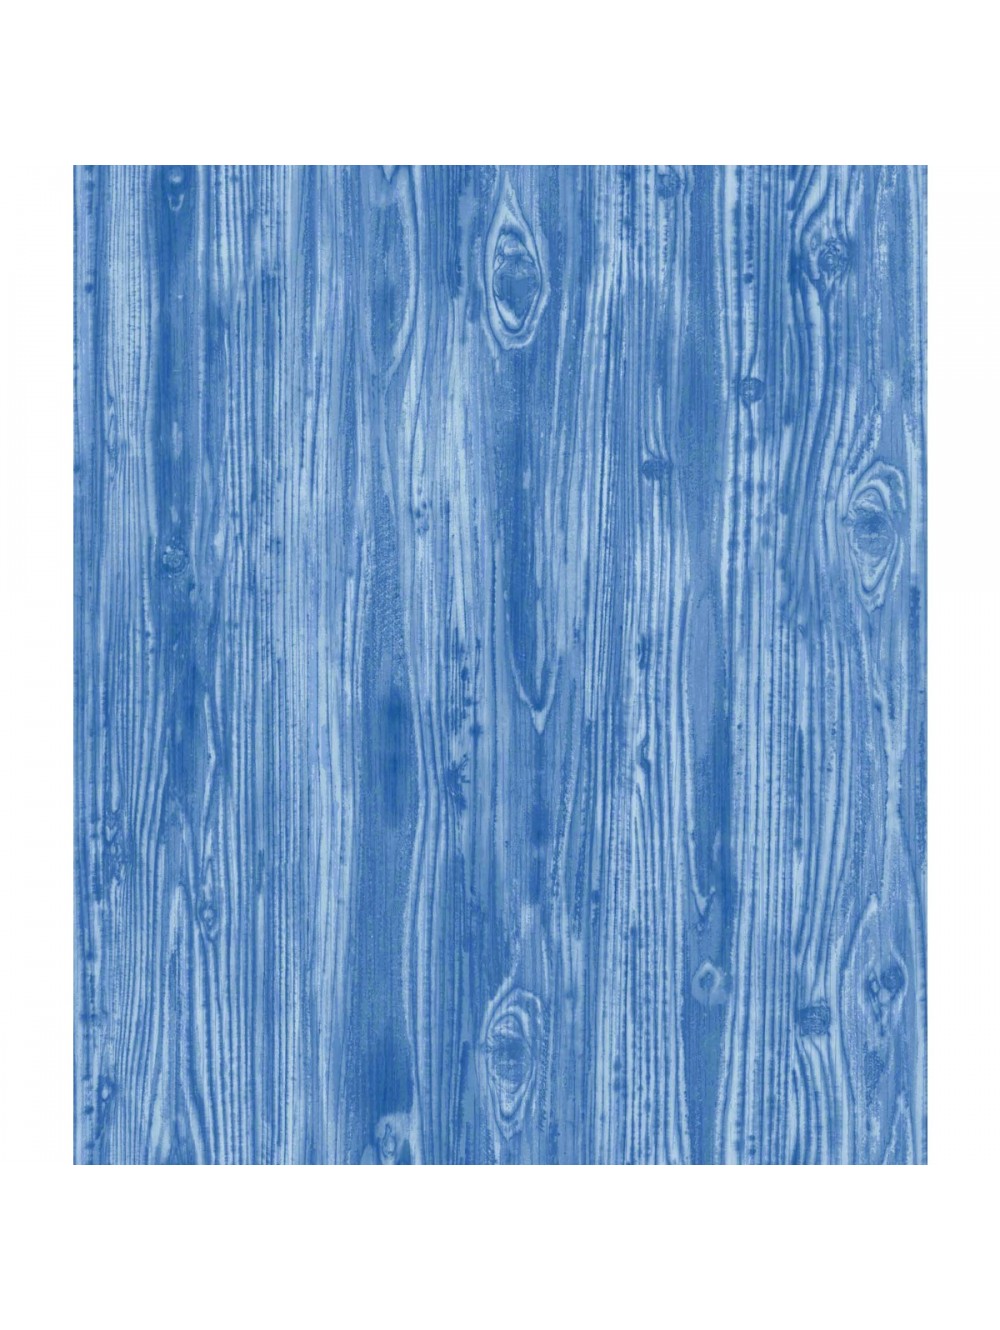 Wallpaper Brione Barnwood Textured Removeable Cobalt